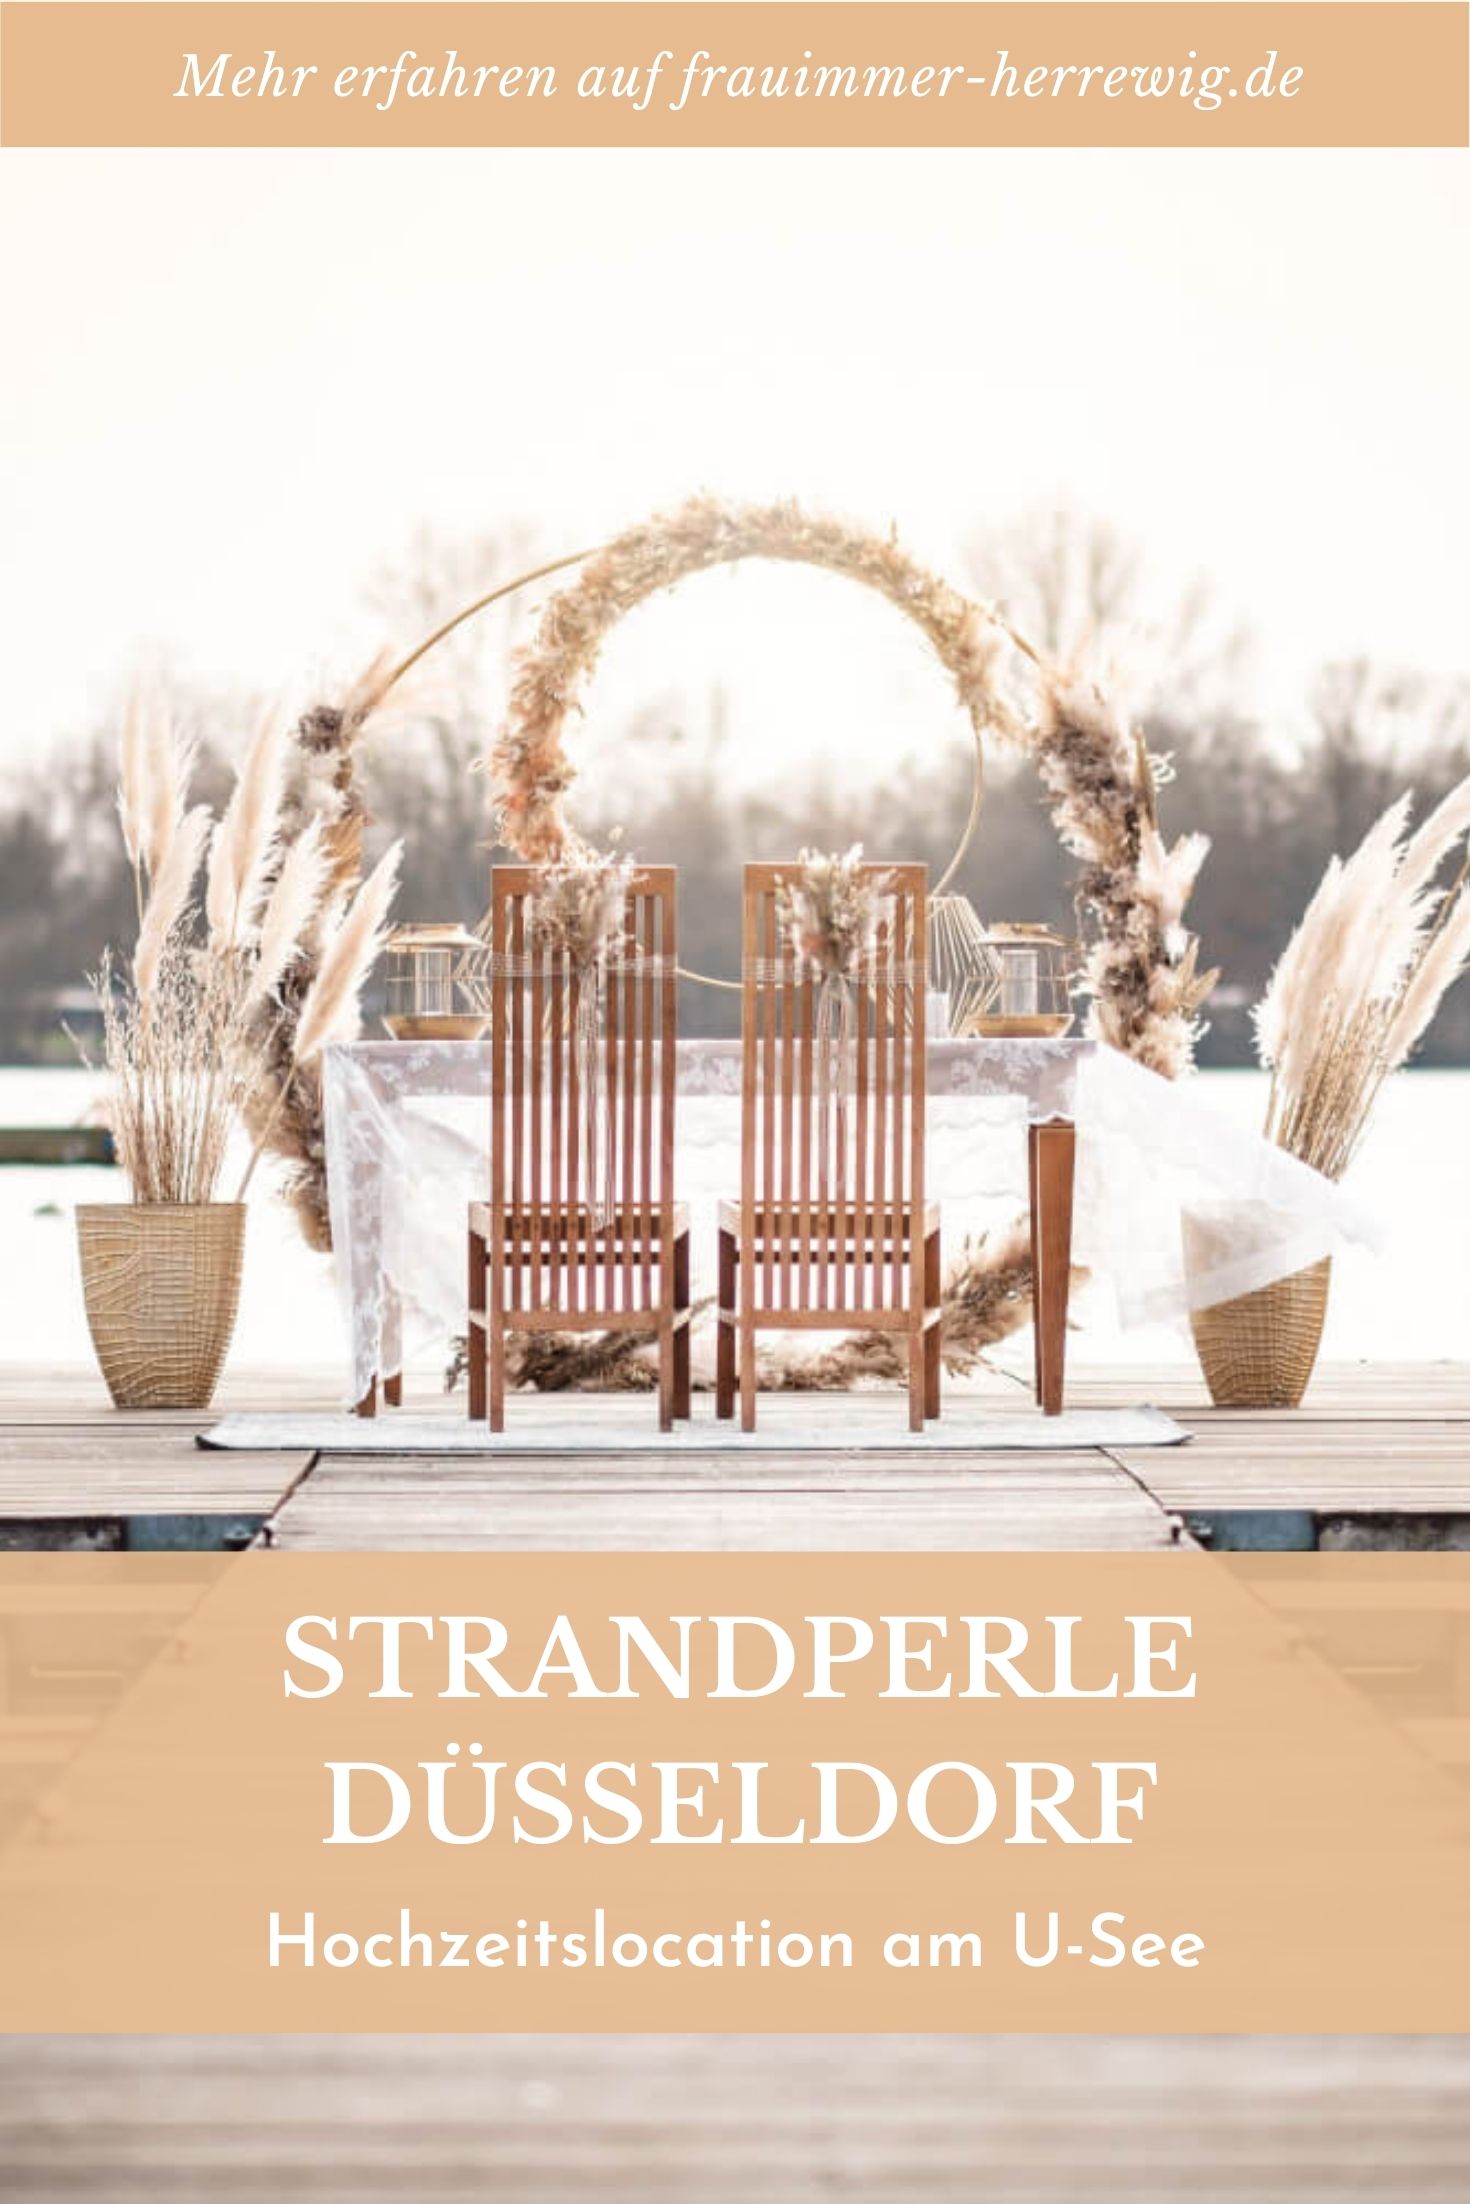 Strandperle duesseldorf 01 – gesehen bei frauimmer-herrewig.de